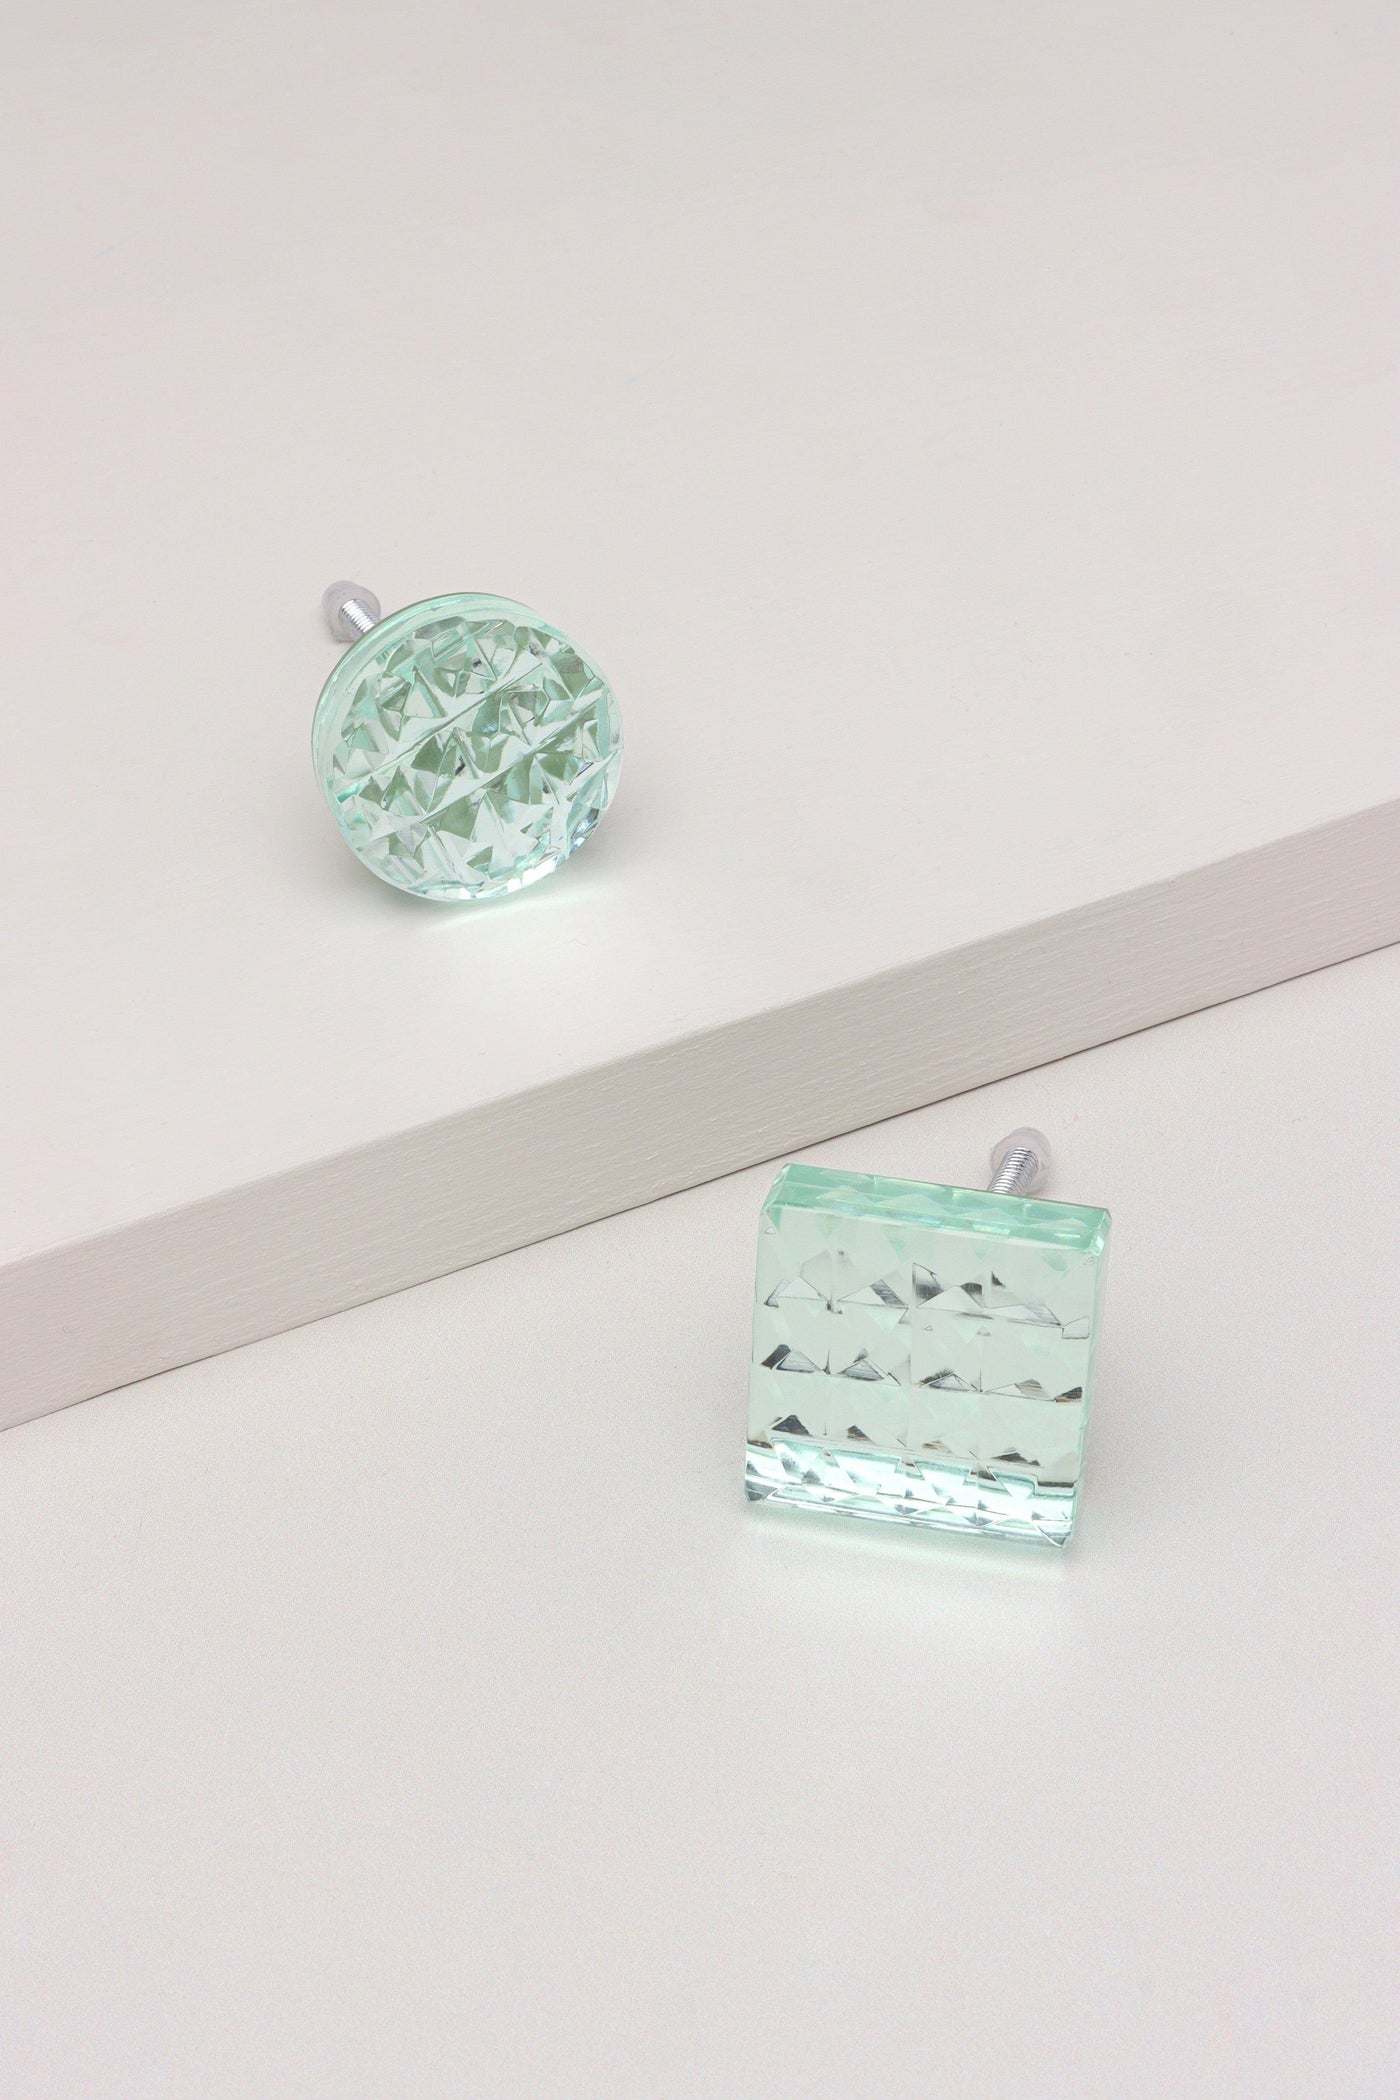 G Decor Door Knobs & Handles Luciano Crystal Clear Diamond Cut Mirror Glass Knobs